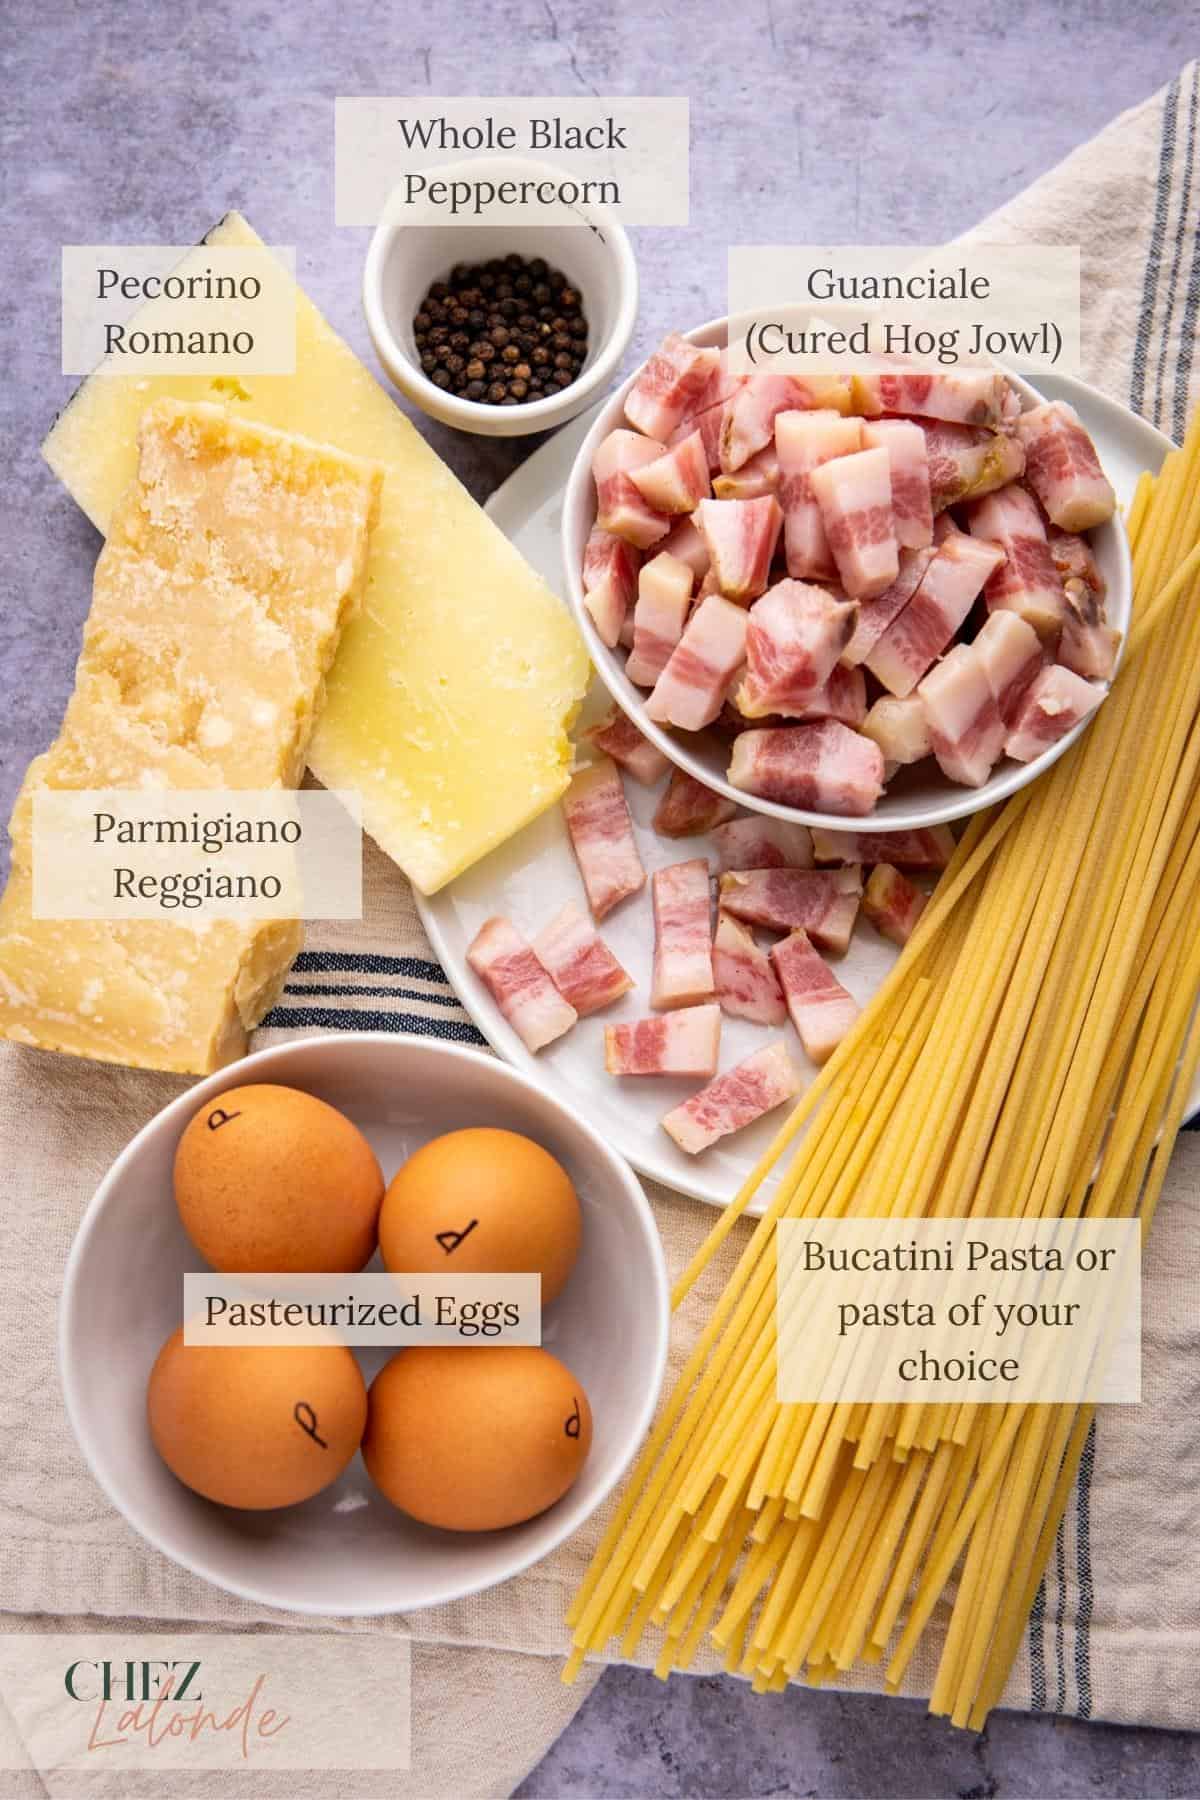 Italian Carbonara Pasta Ingredients. We have Pasta, eggs, guanciale, black peppercorn, Pecorino Romano and Parmigiano Reggiano cheese. 